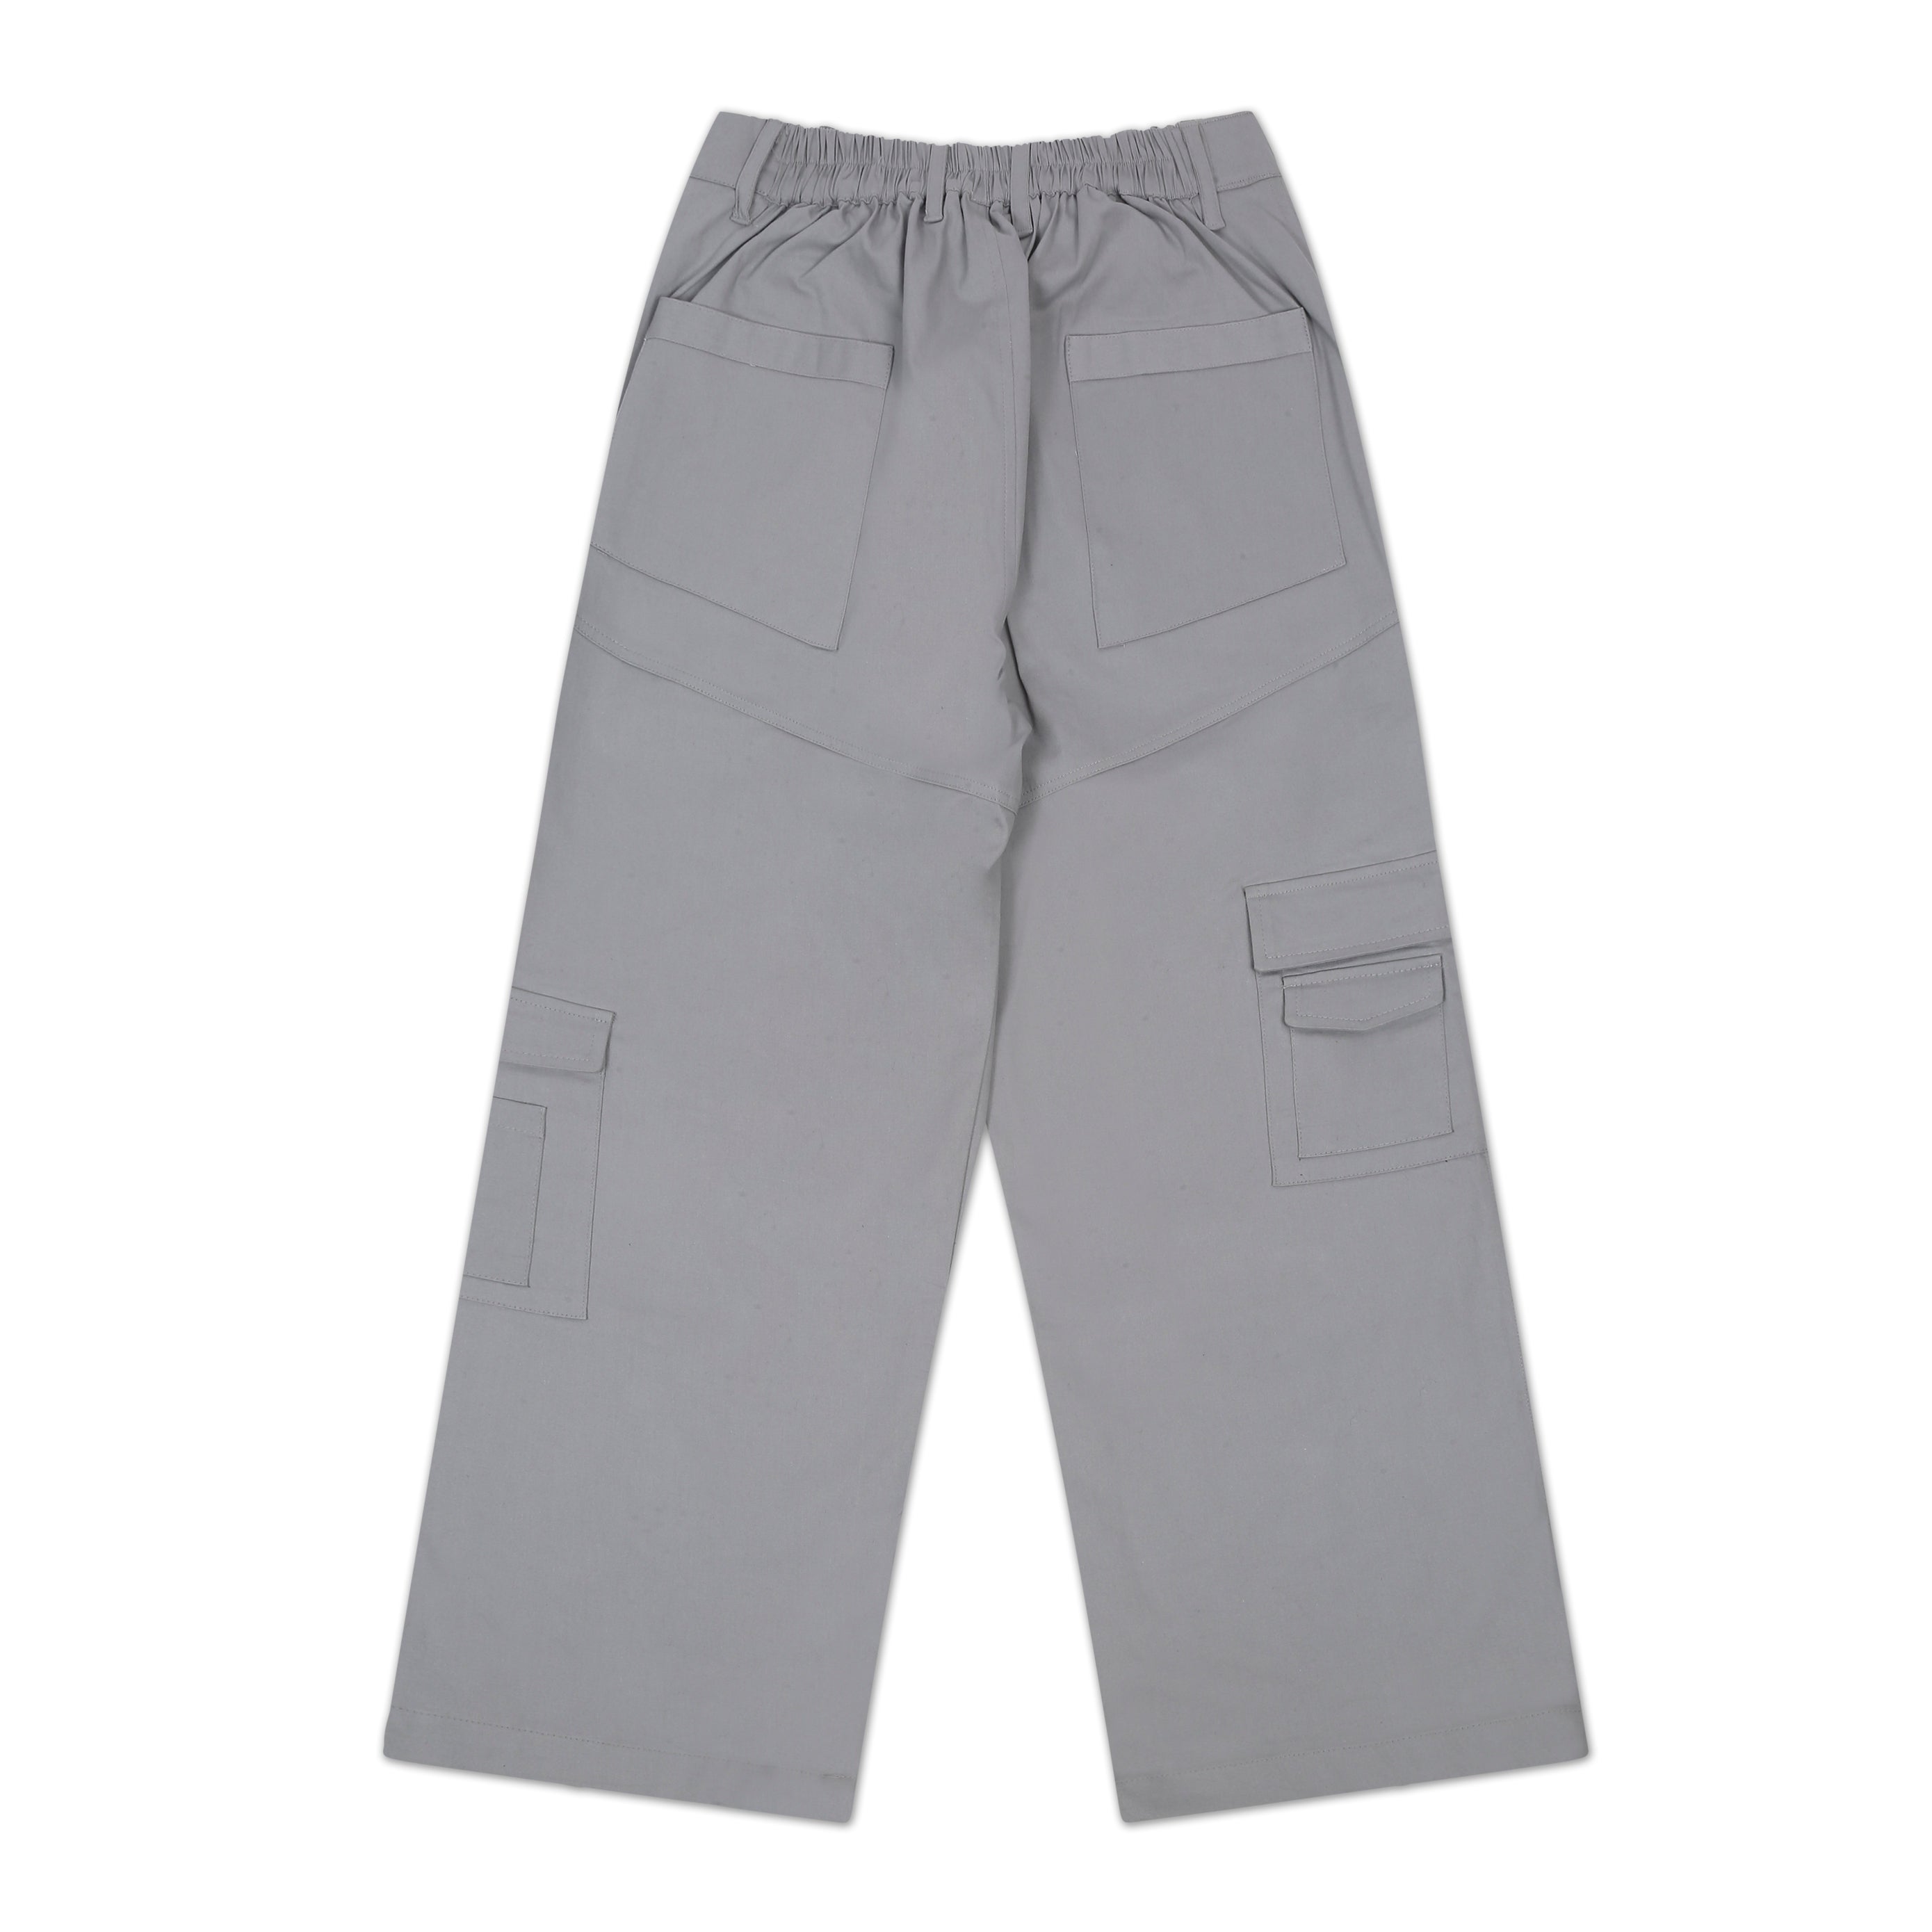 Grey oversized cargo pants